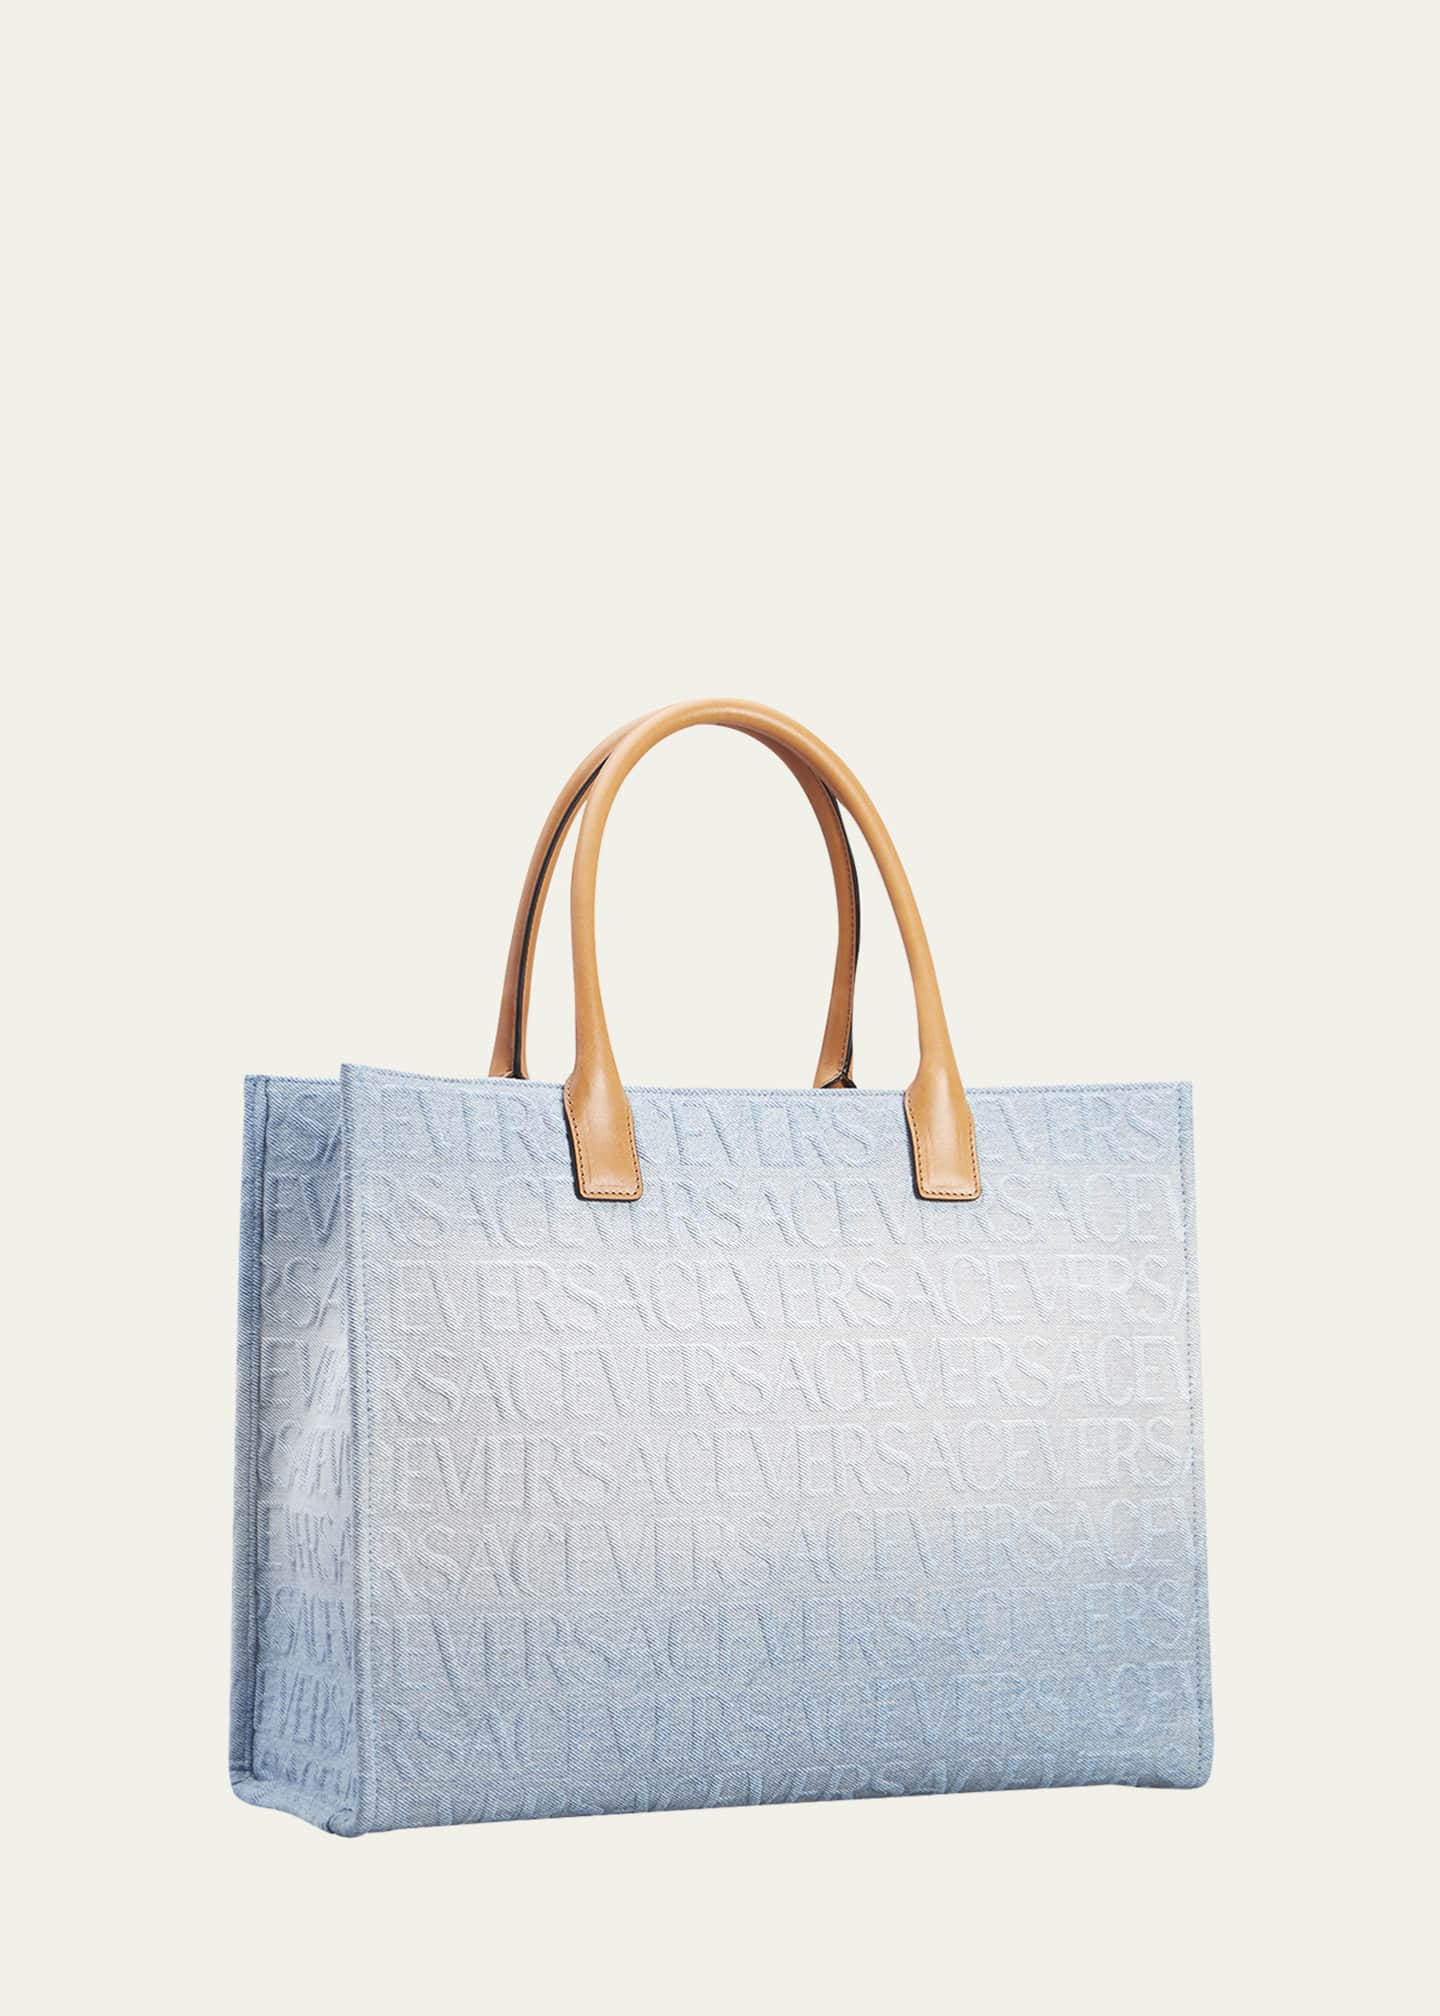 Versace La Medusa Monogram Canvas Tote Bag